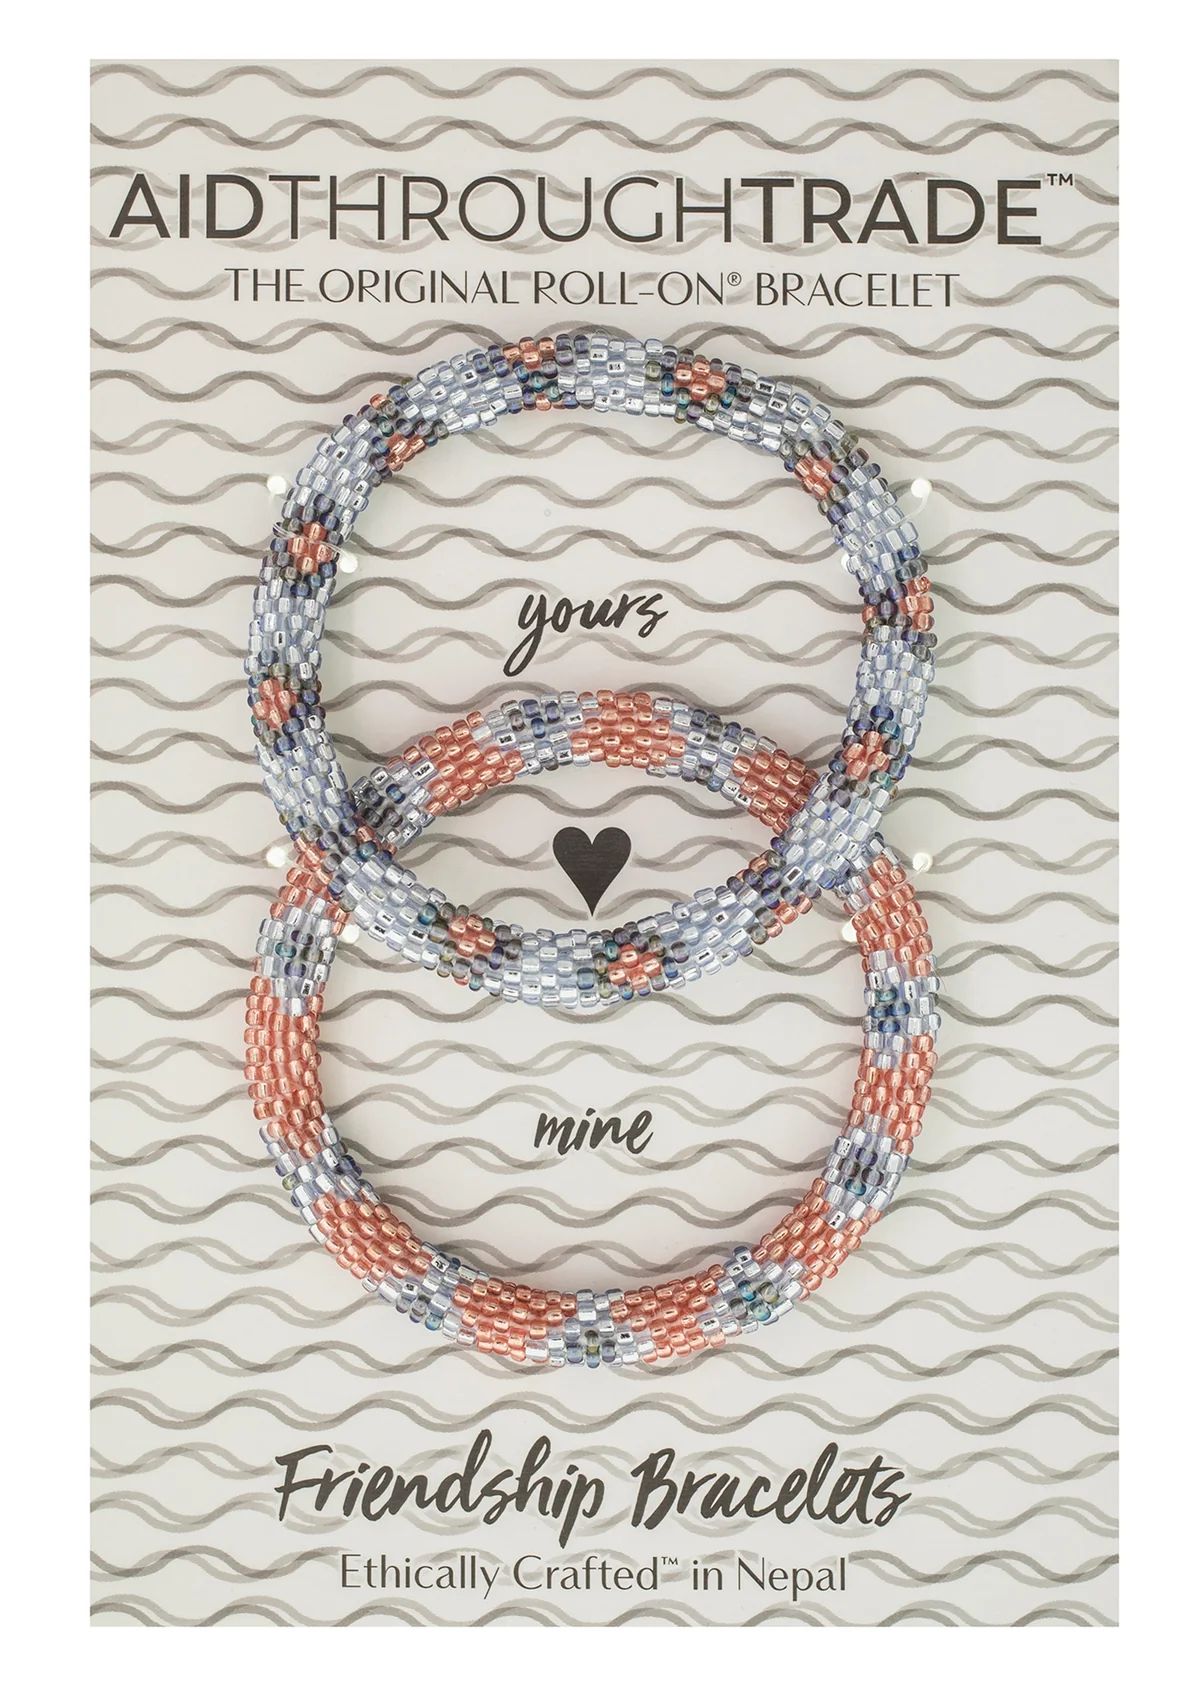 Roll-On® Friendship Bracelets  Glitter | Aid Through Trade